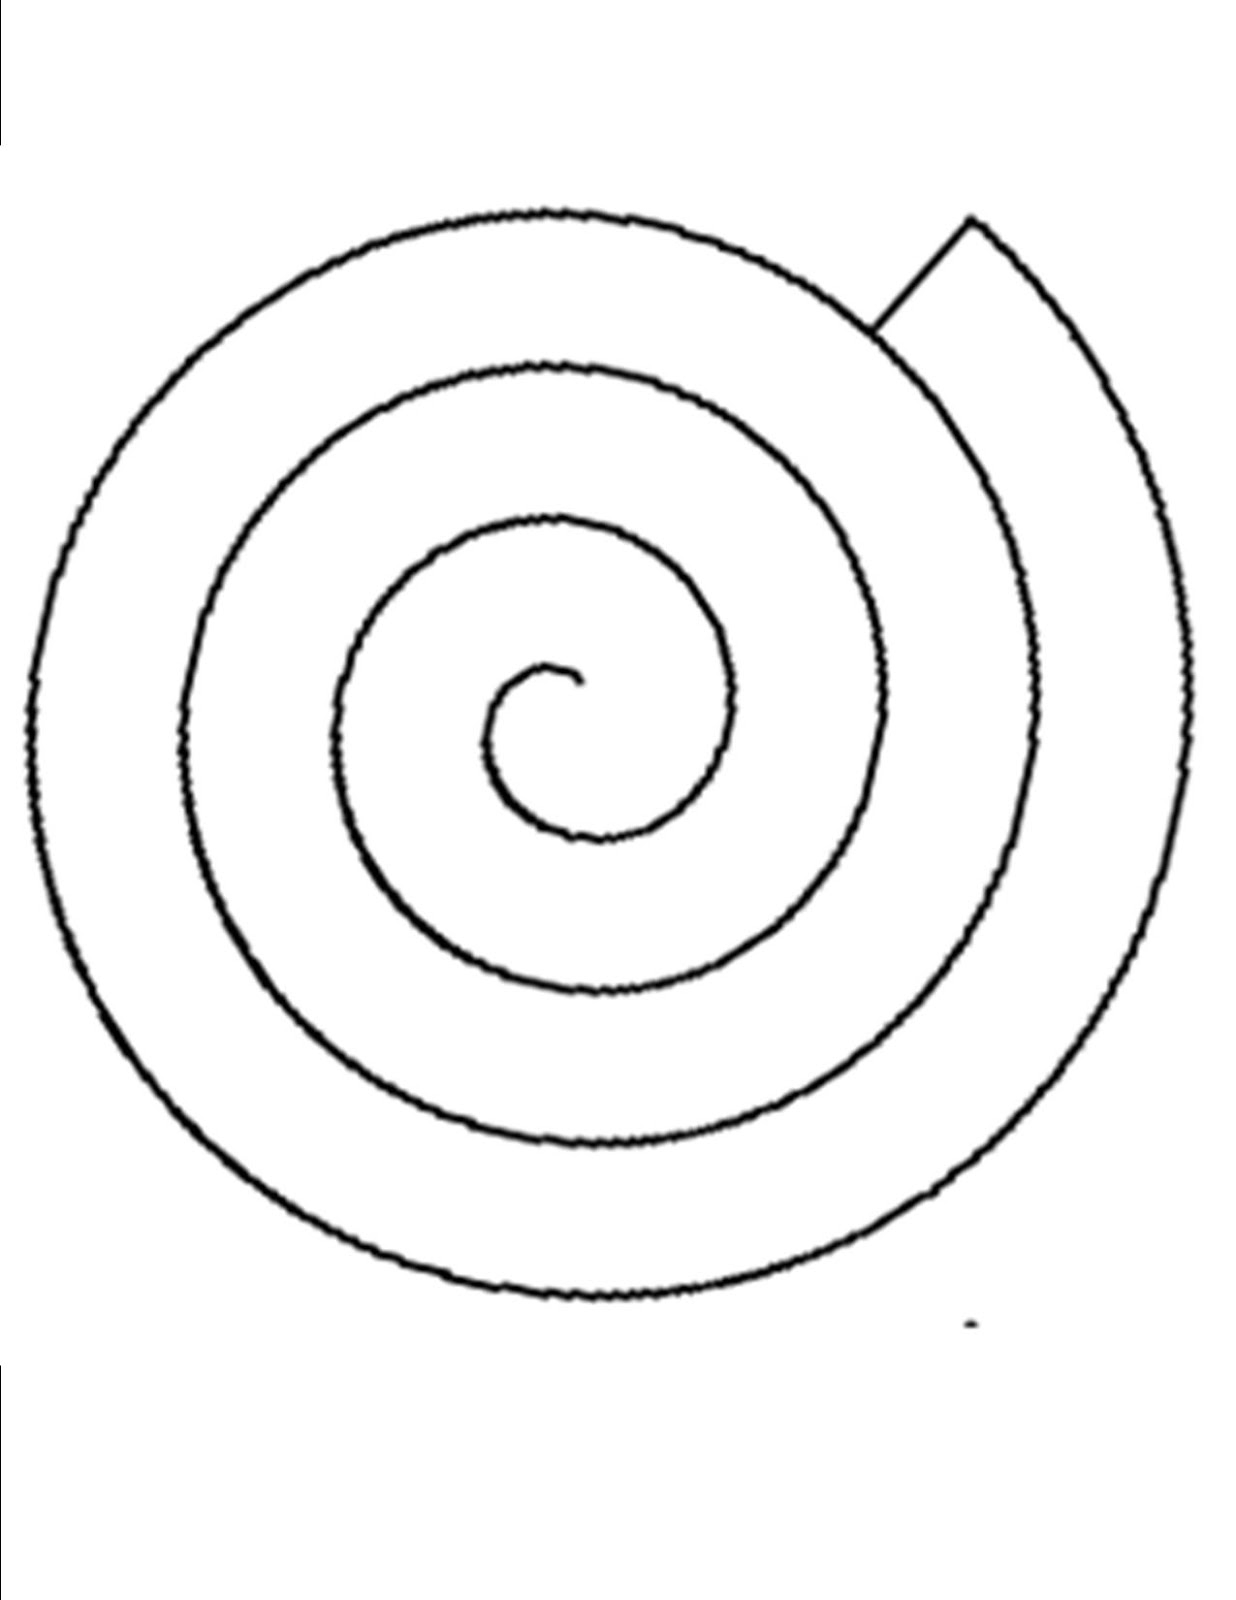 Program #4 spiral according to its photo